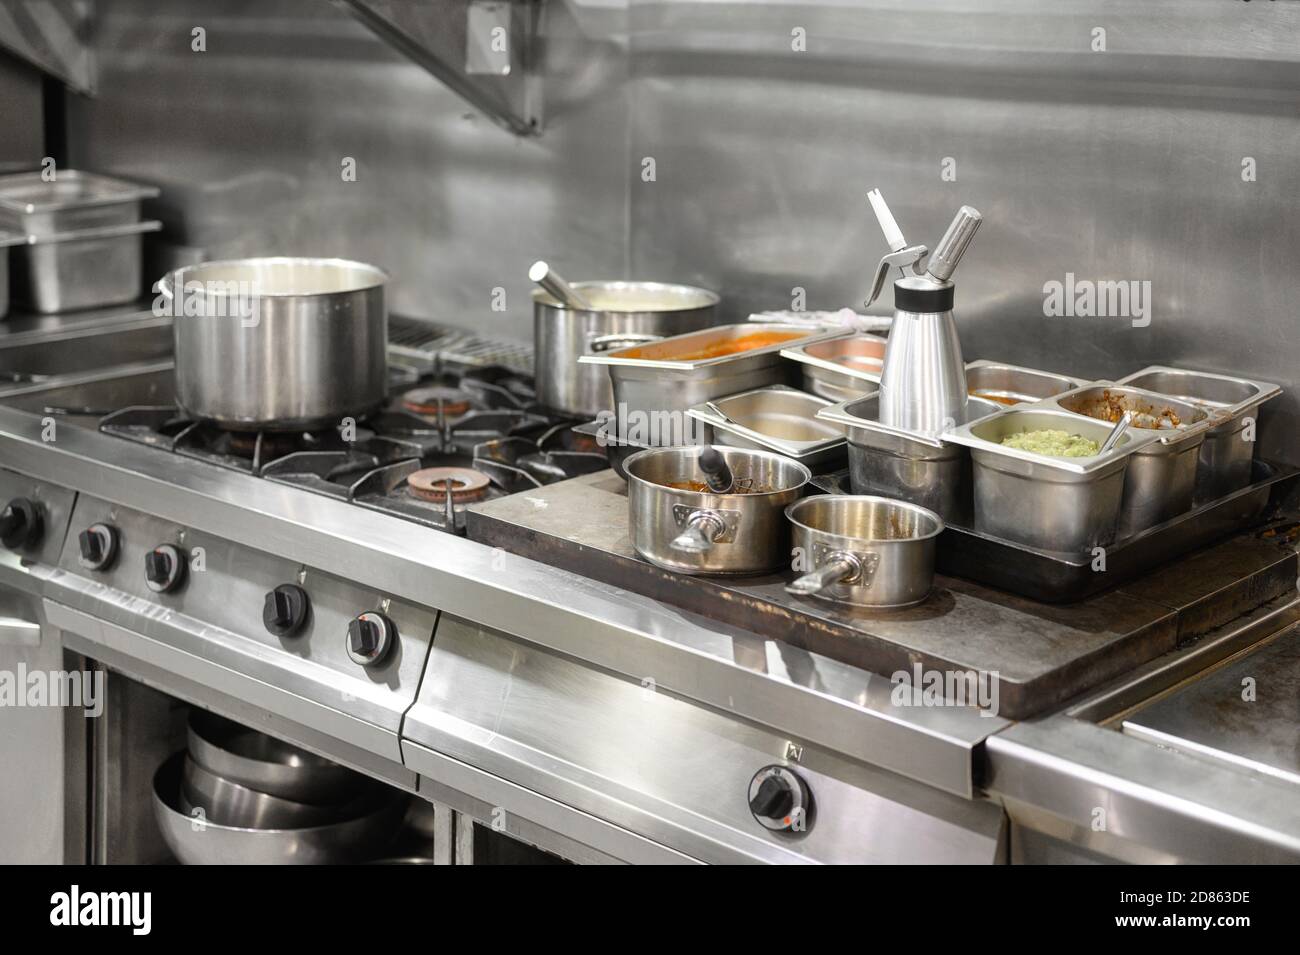 https://c8.alamy.com/comp/2D863DE/stainless-steel-restaurant-professional-kitchen-equipment-and-work-surface-high-quality-photo-2D863DE.jpg